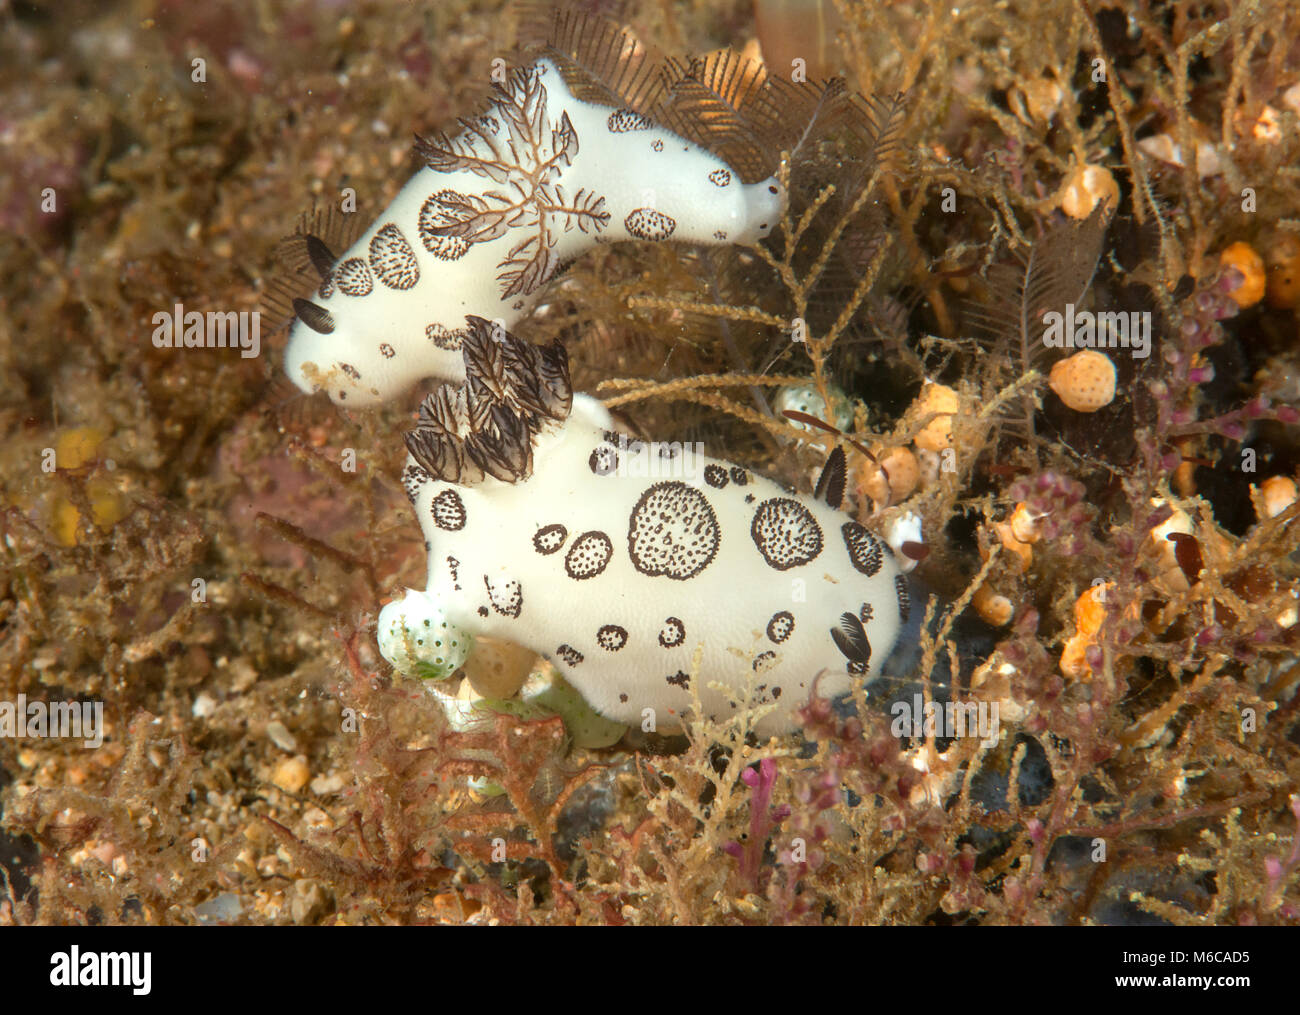 Jorunna funebris nudibranch crawling on sea bottom of Bali Stock Photo